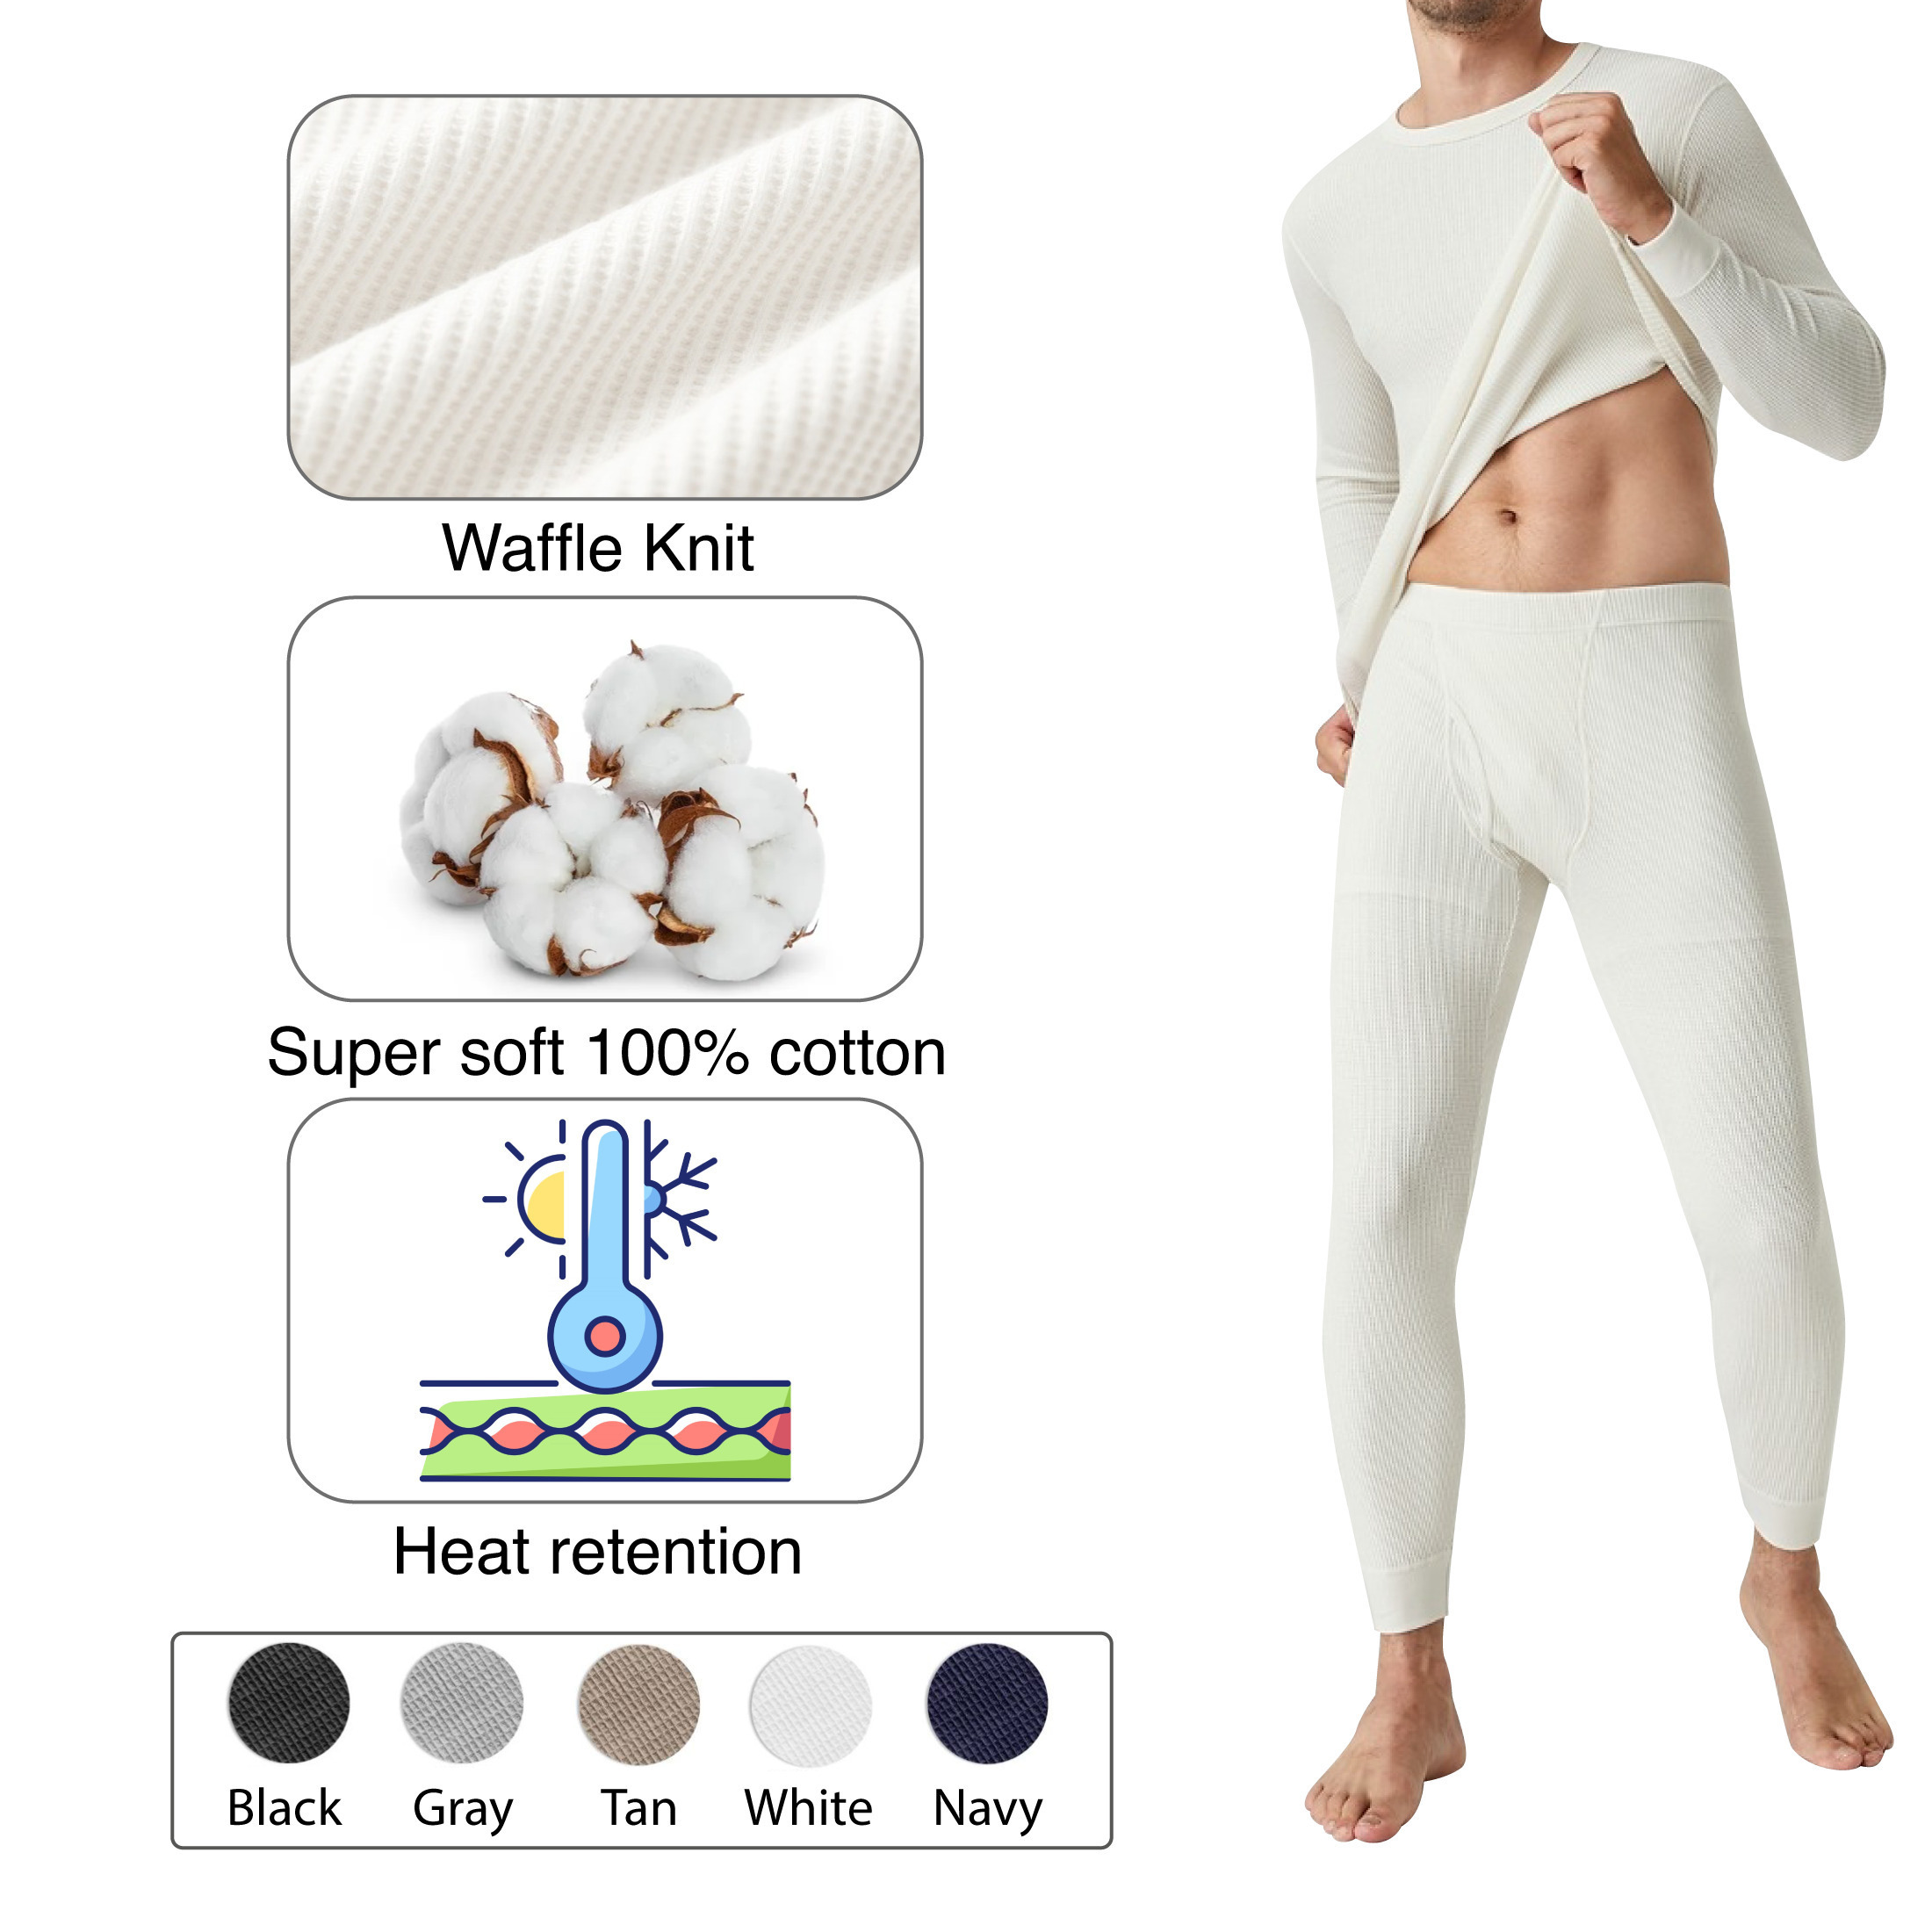 2-Piece: Men's Super Soft Cotton Waffle Knit Winter Thermal Underwear Set - White, Large